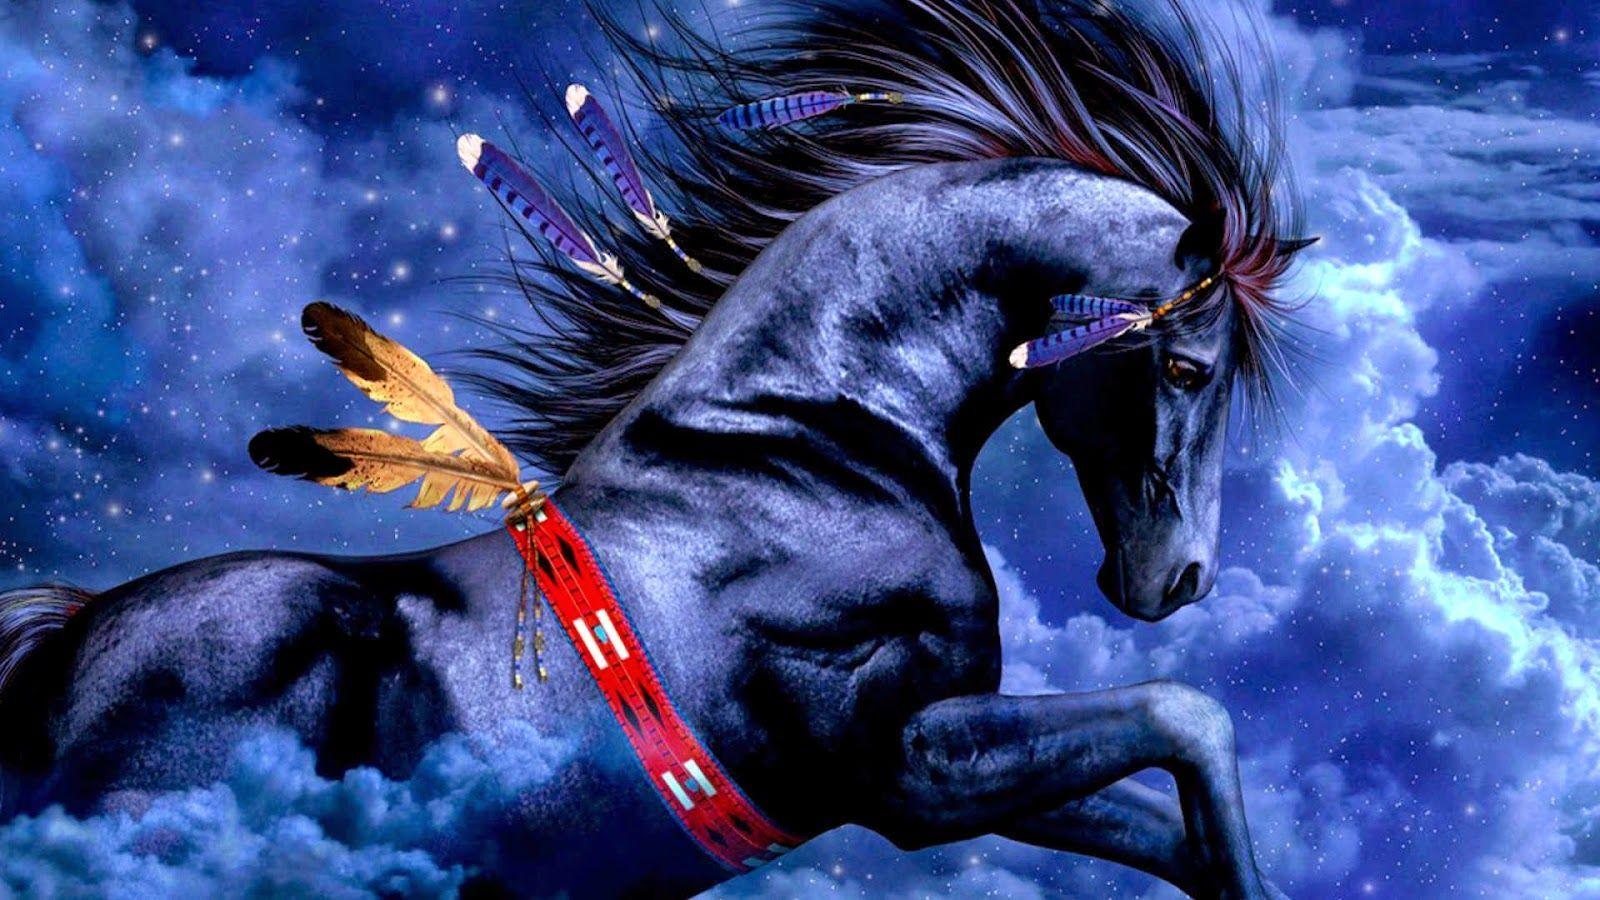 blue horse background